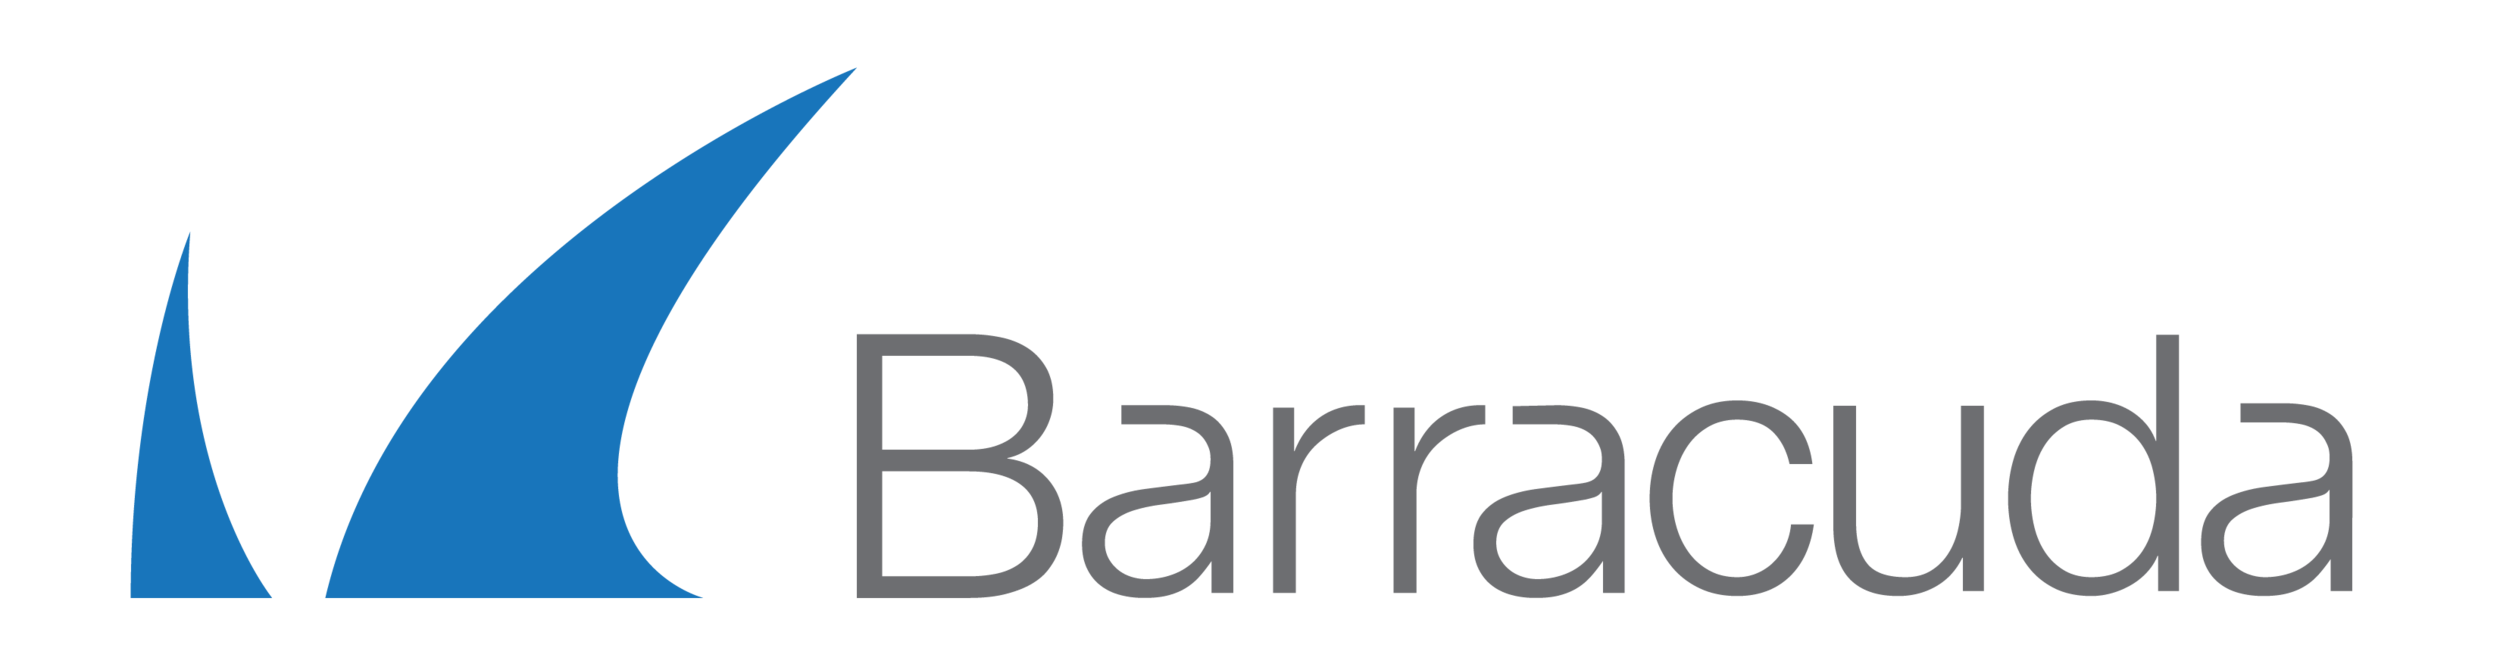 barracuda-networkslogo.png